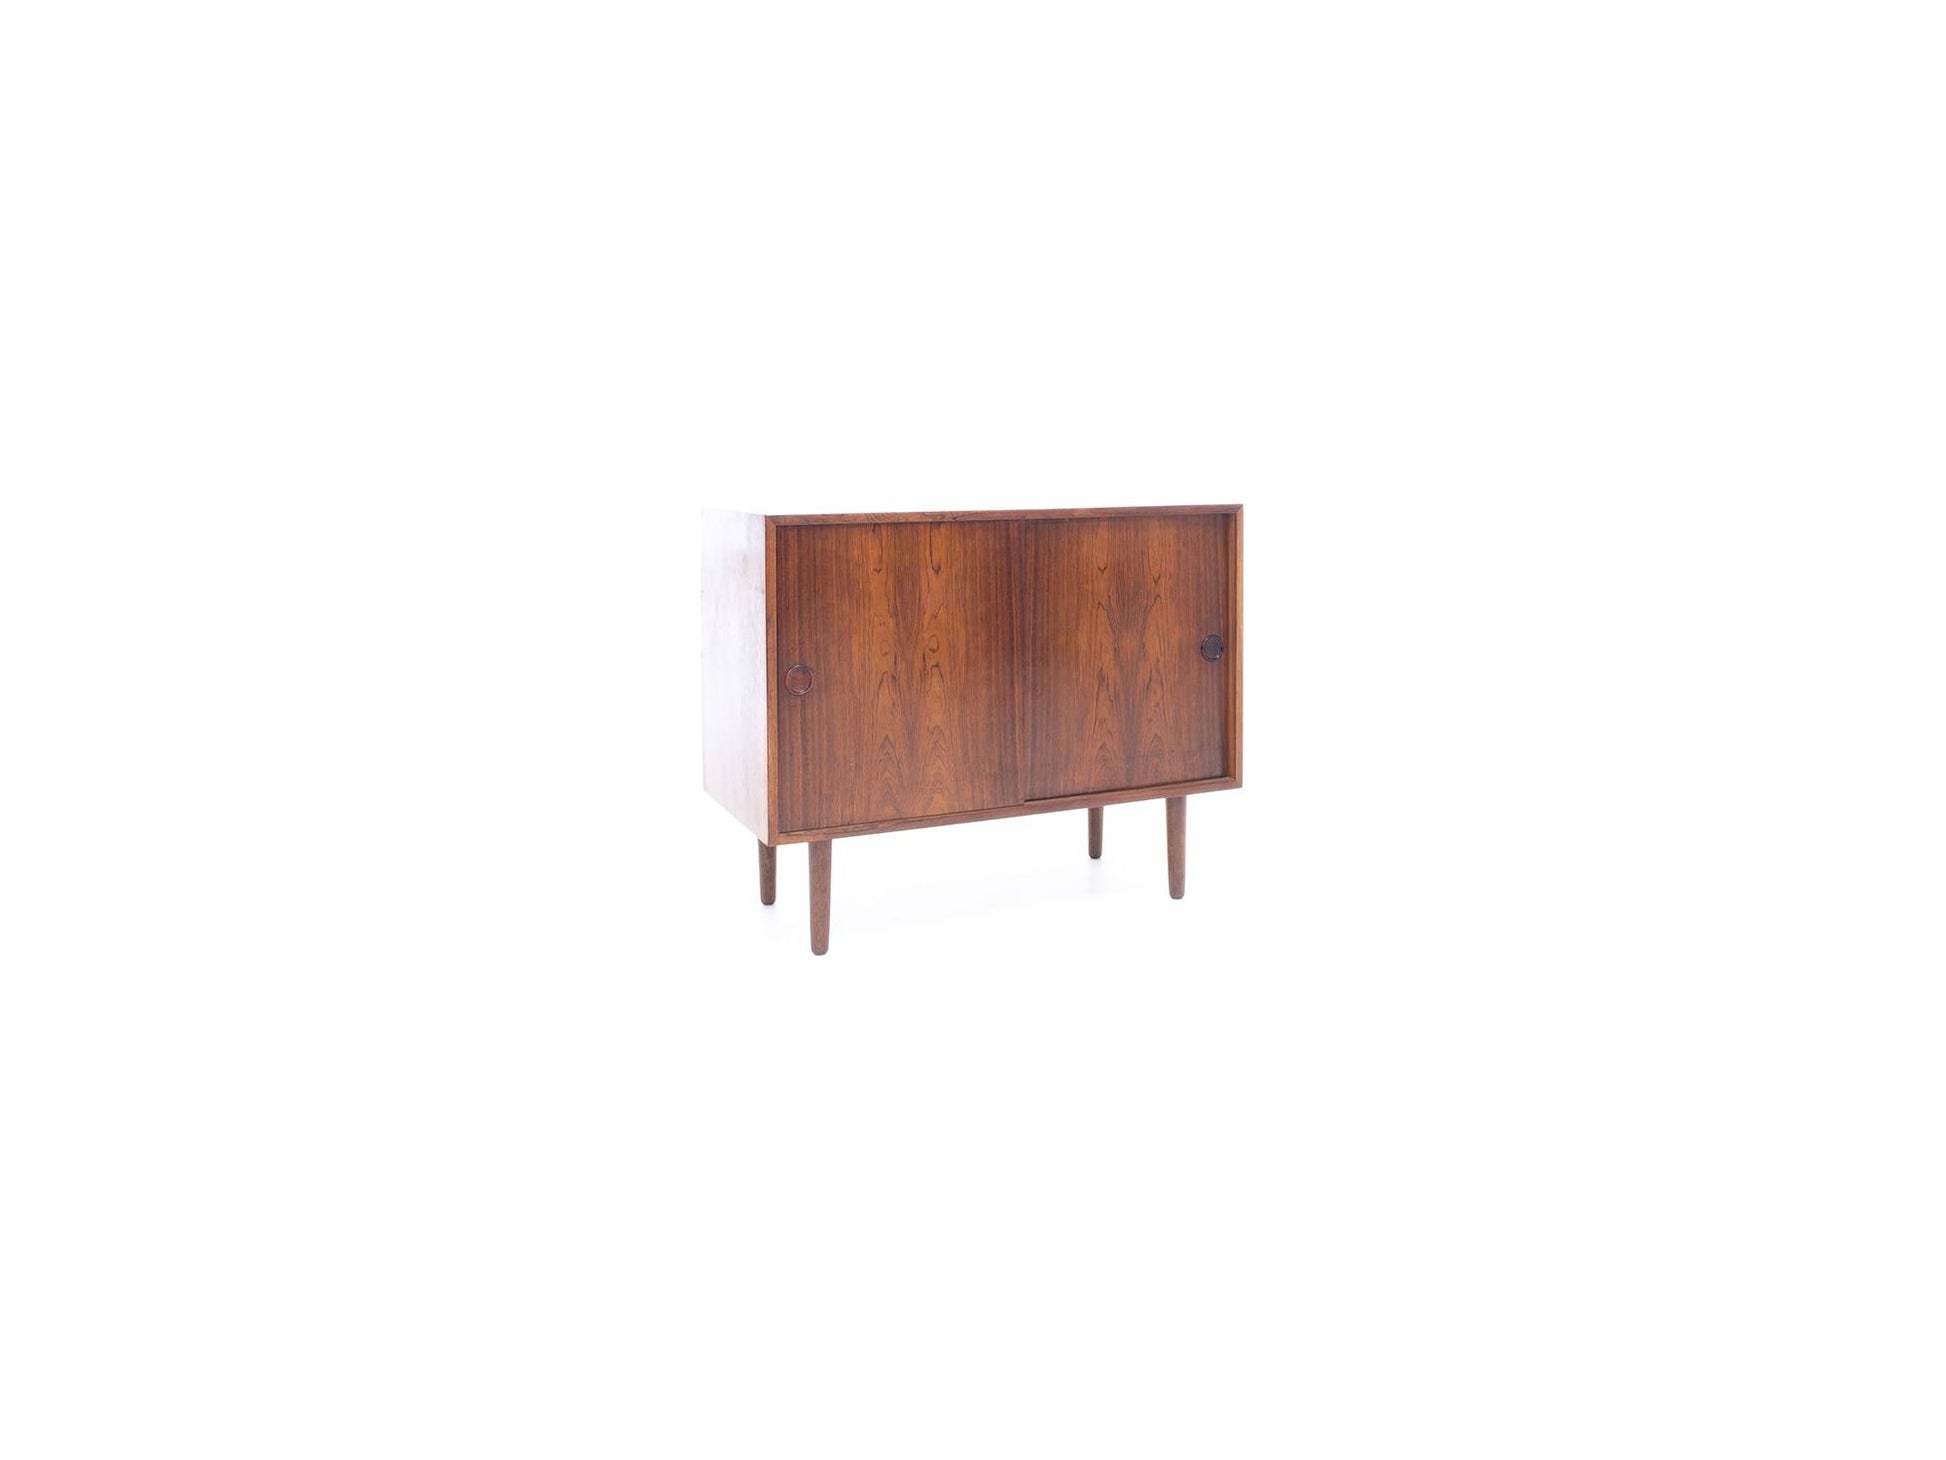 Rosewood Cabinet by Kai Kristiansen for Feldballes Møbelfabrik Habitus London